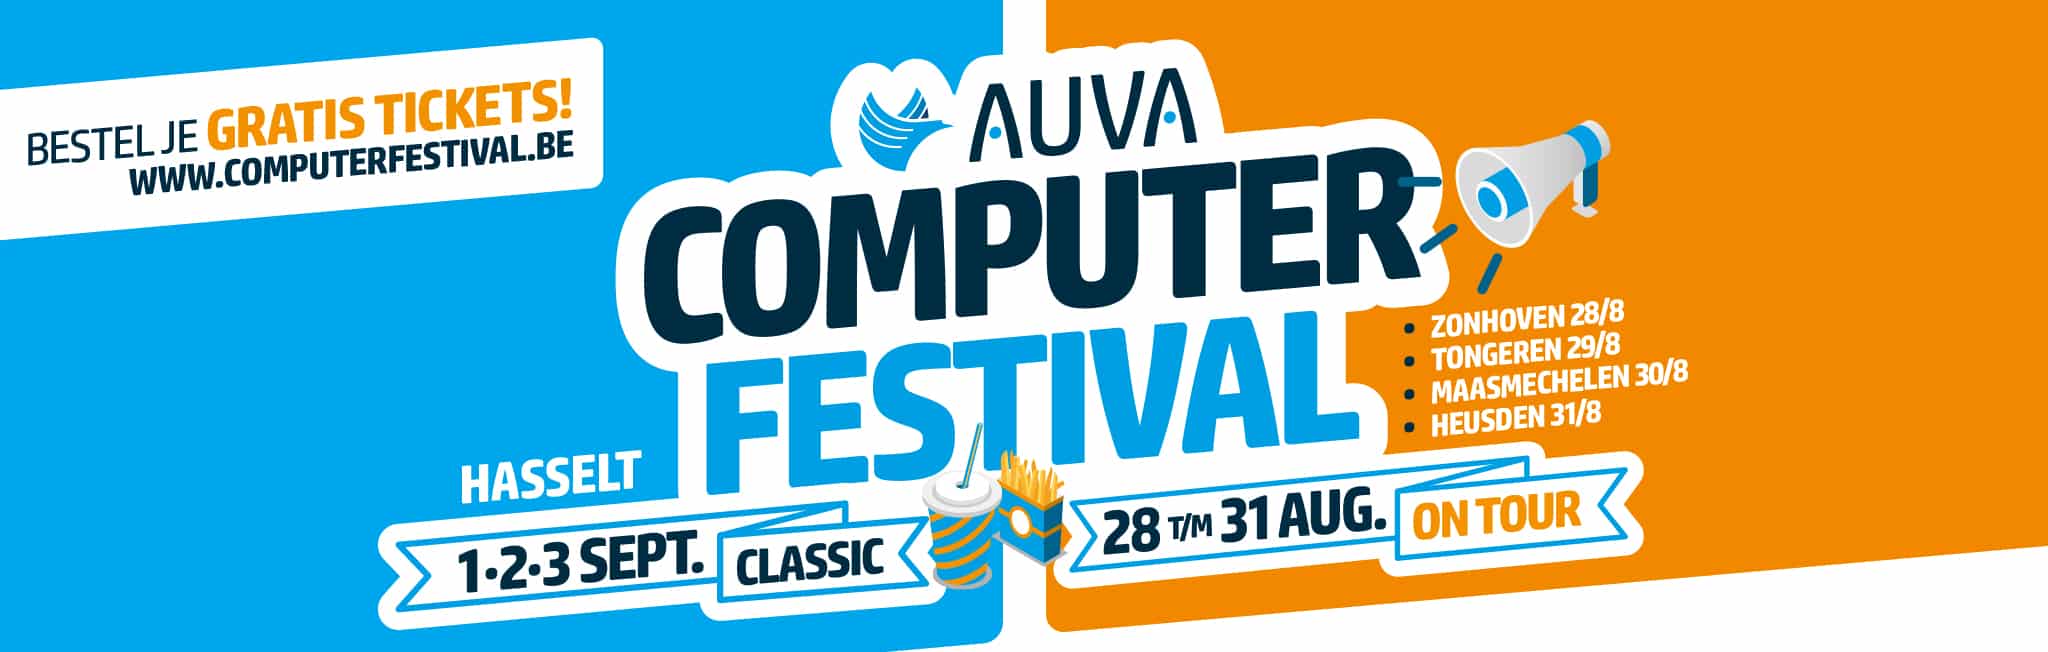 computerfestival header